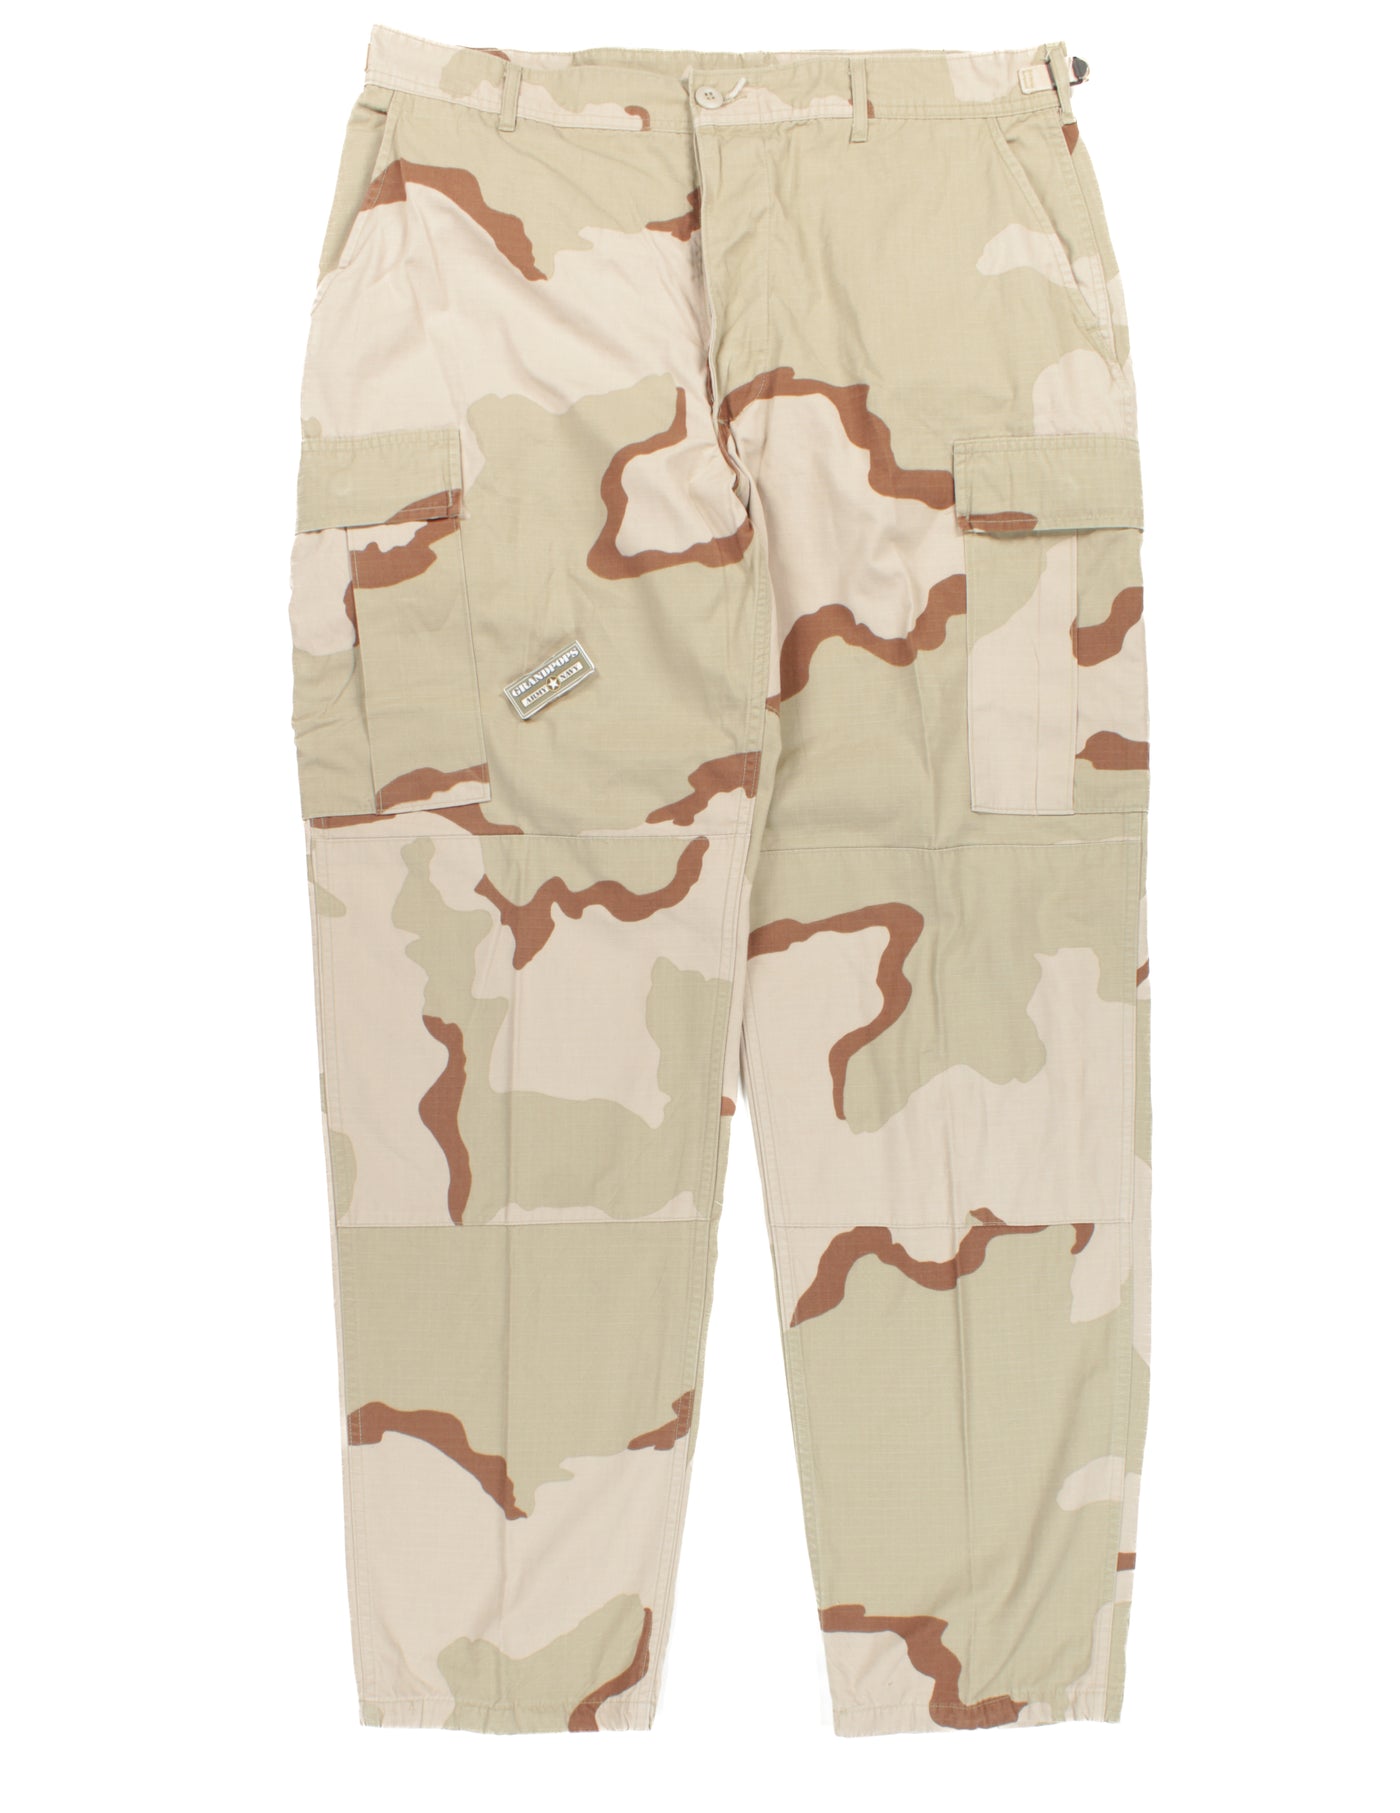 Gi Style 3-Color Desert Camo DCU Field Pants